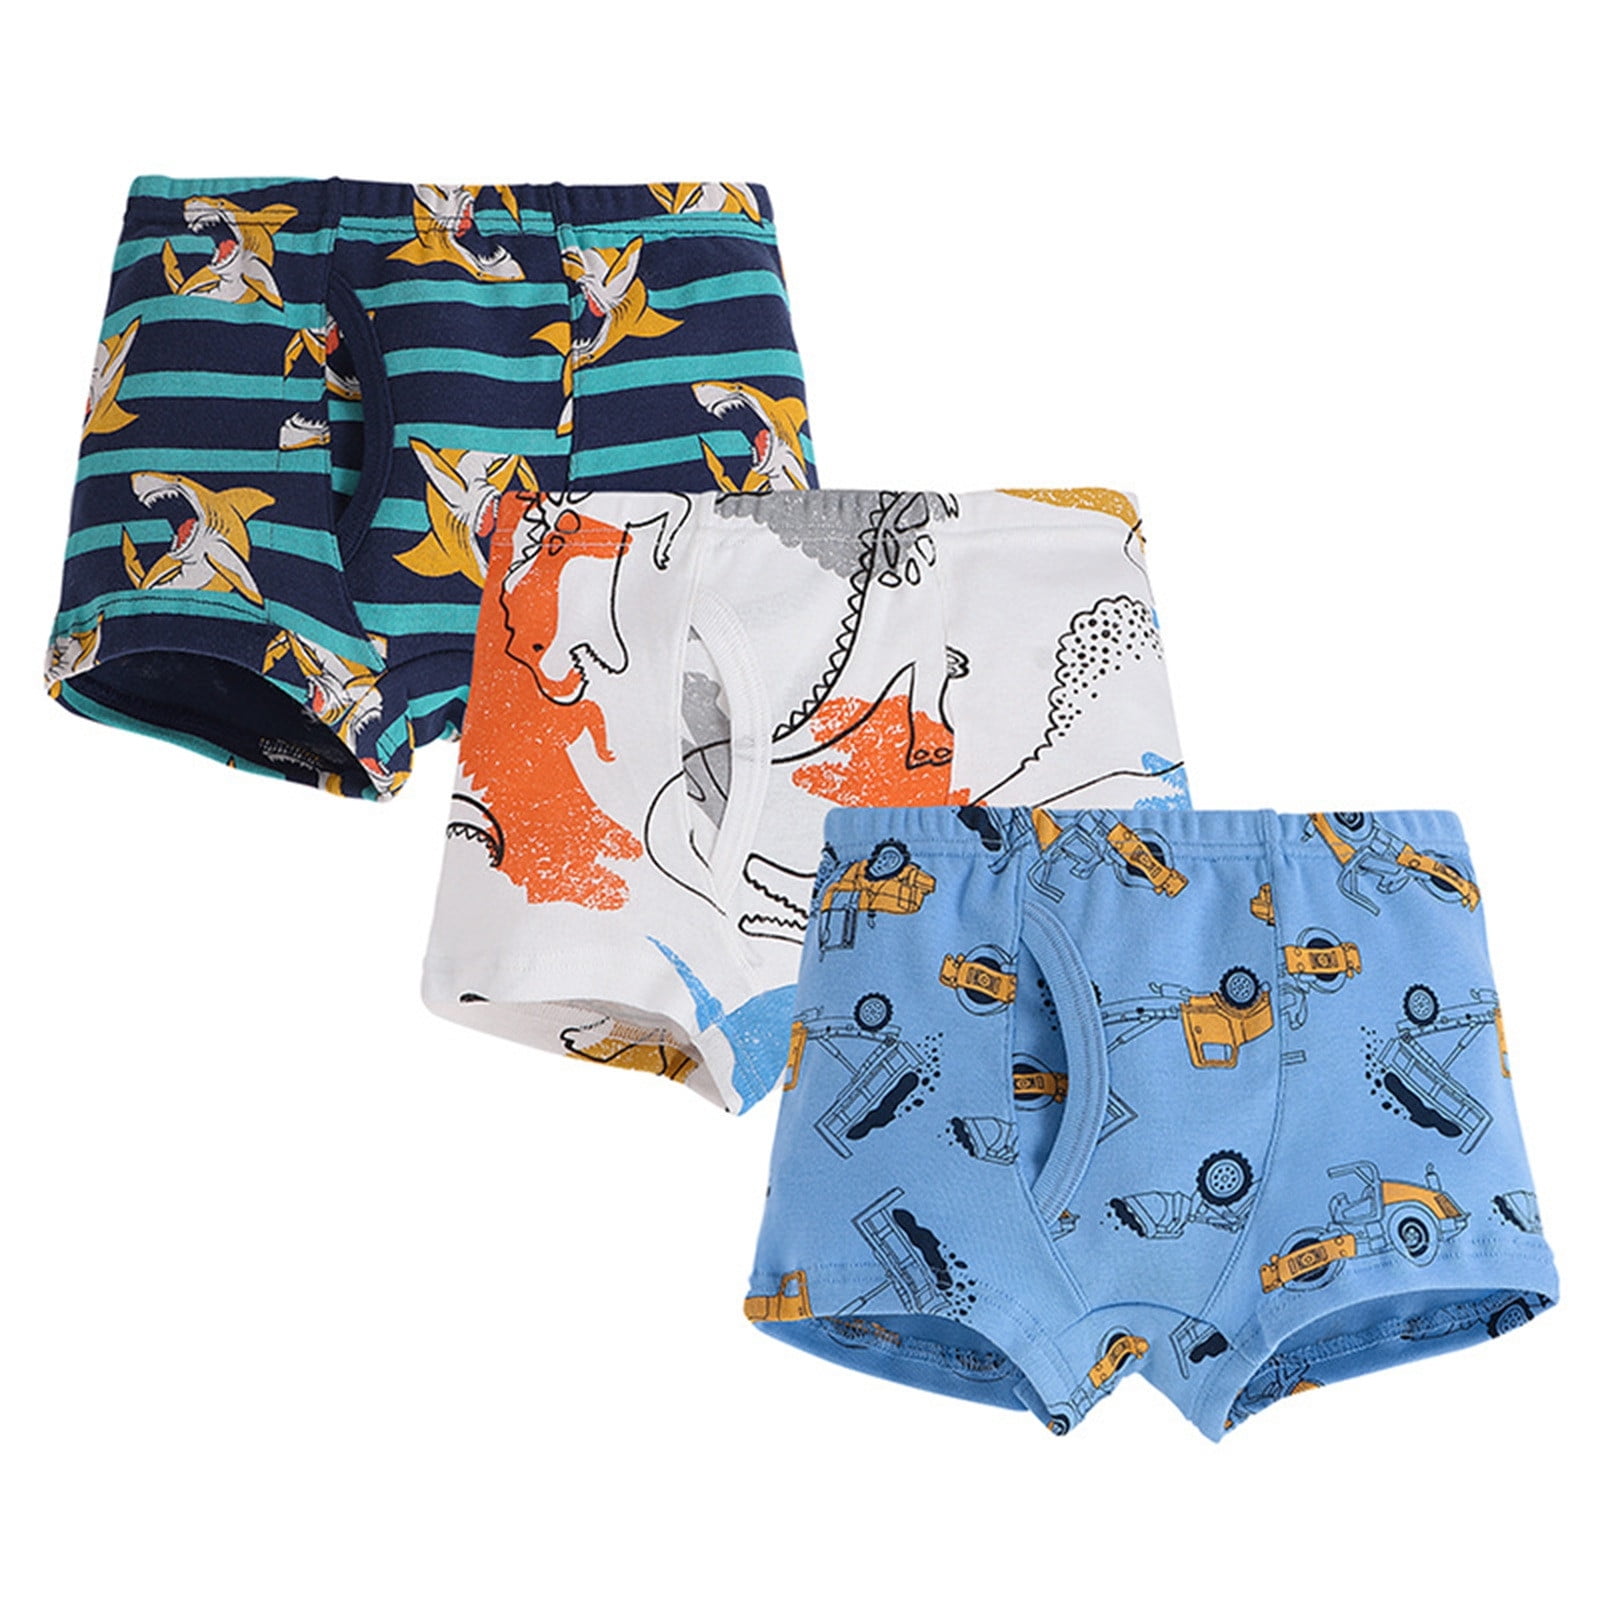 Kids Toddler Baby Boys Underwear Cute Cartoon Briefs Shorts Pants ...